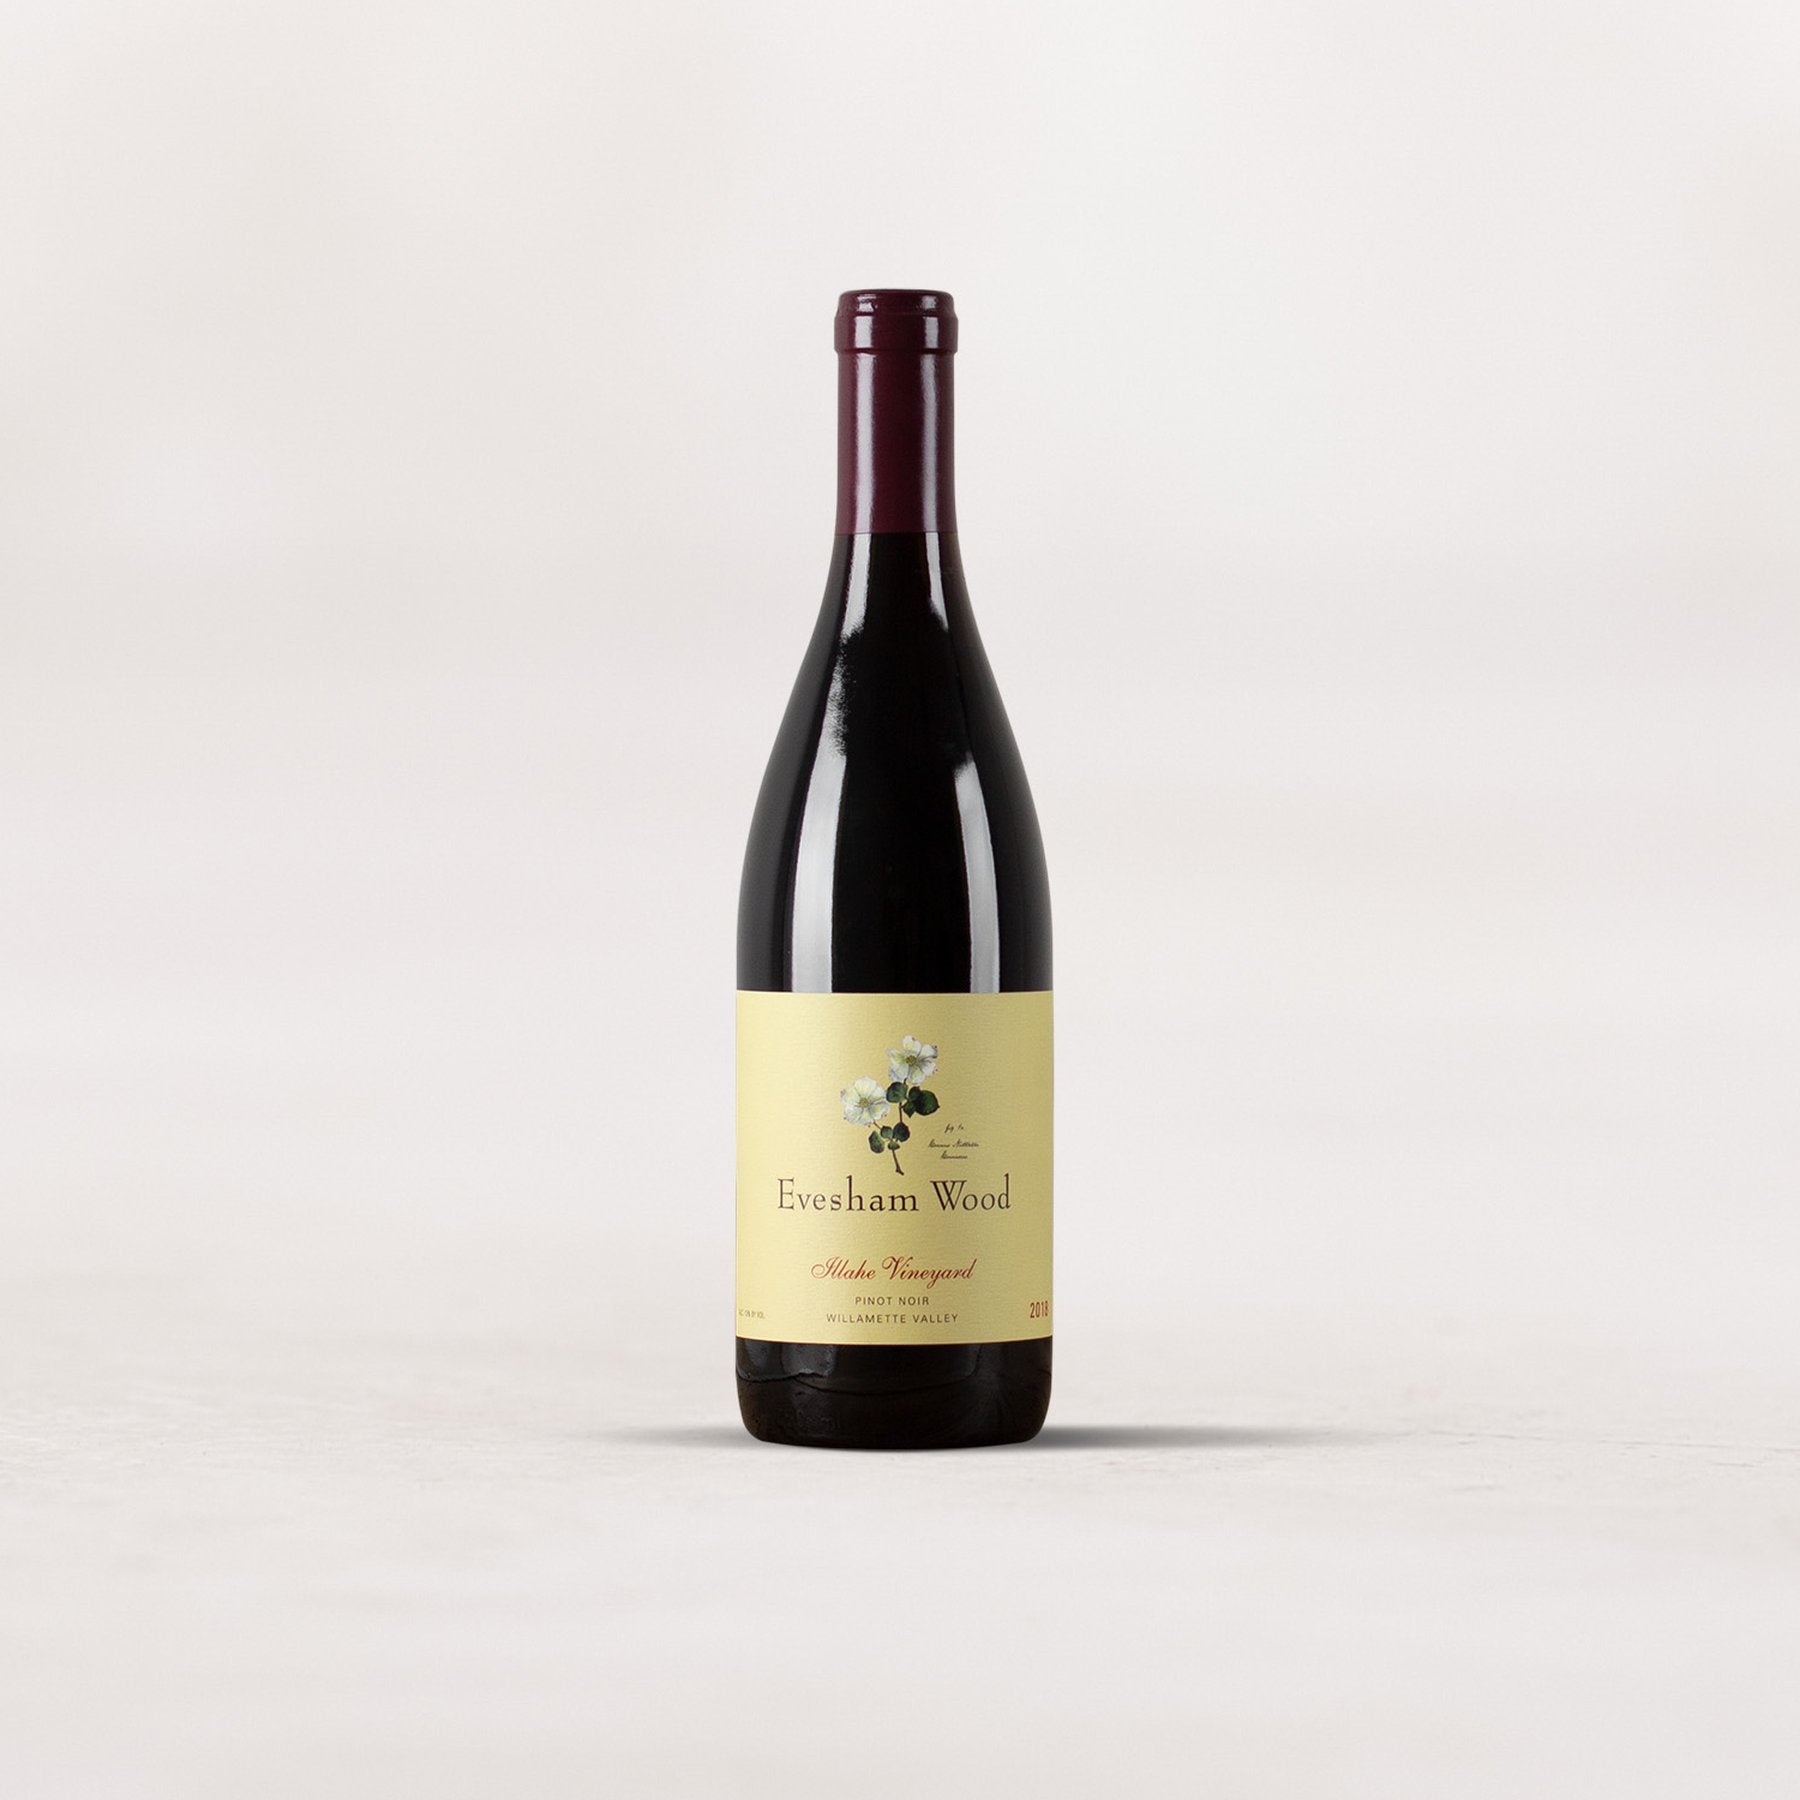 Evesham Wood, “Illahe Vineyard” Pinot Noir